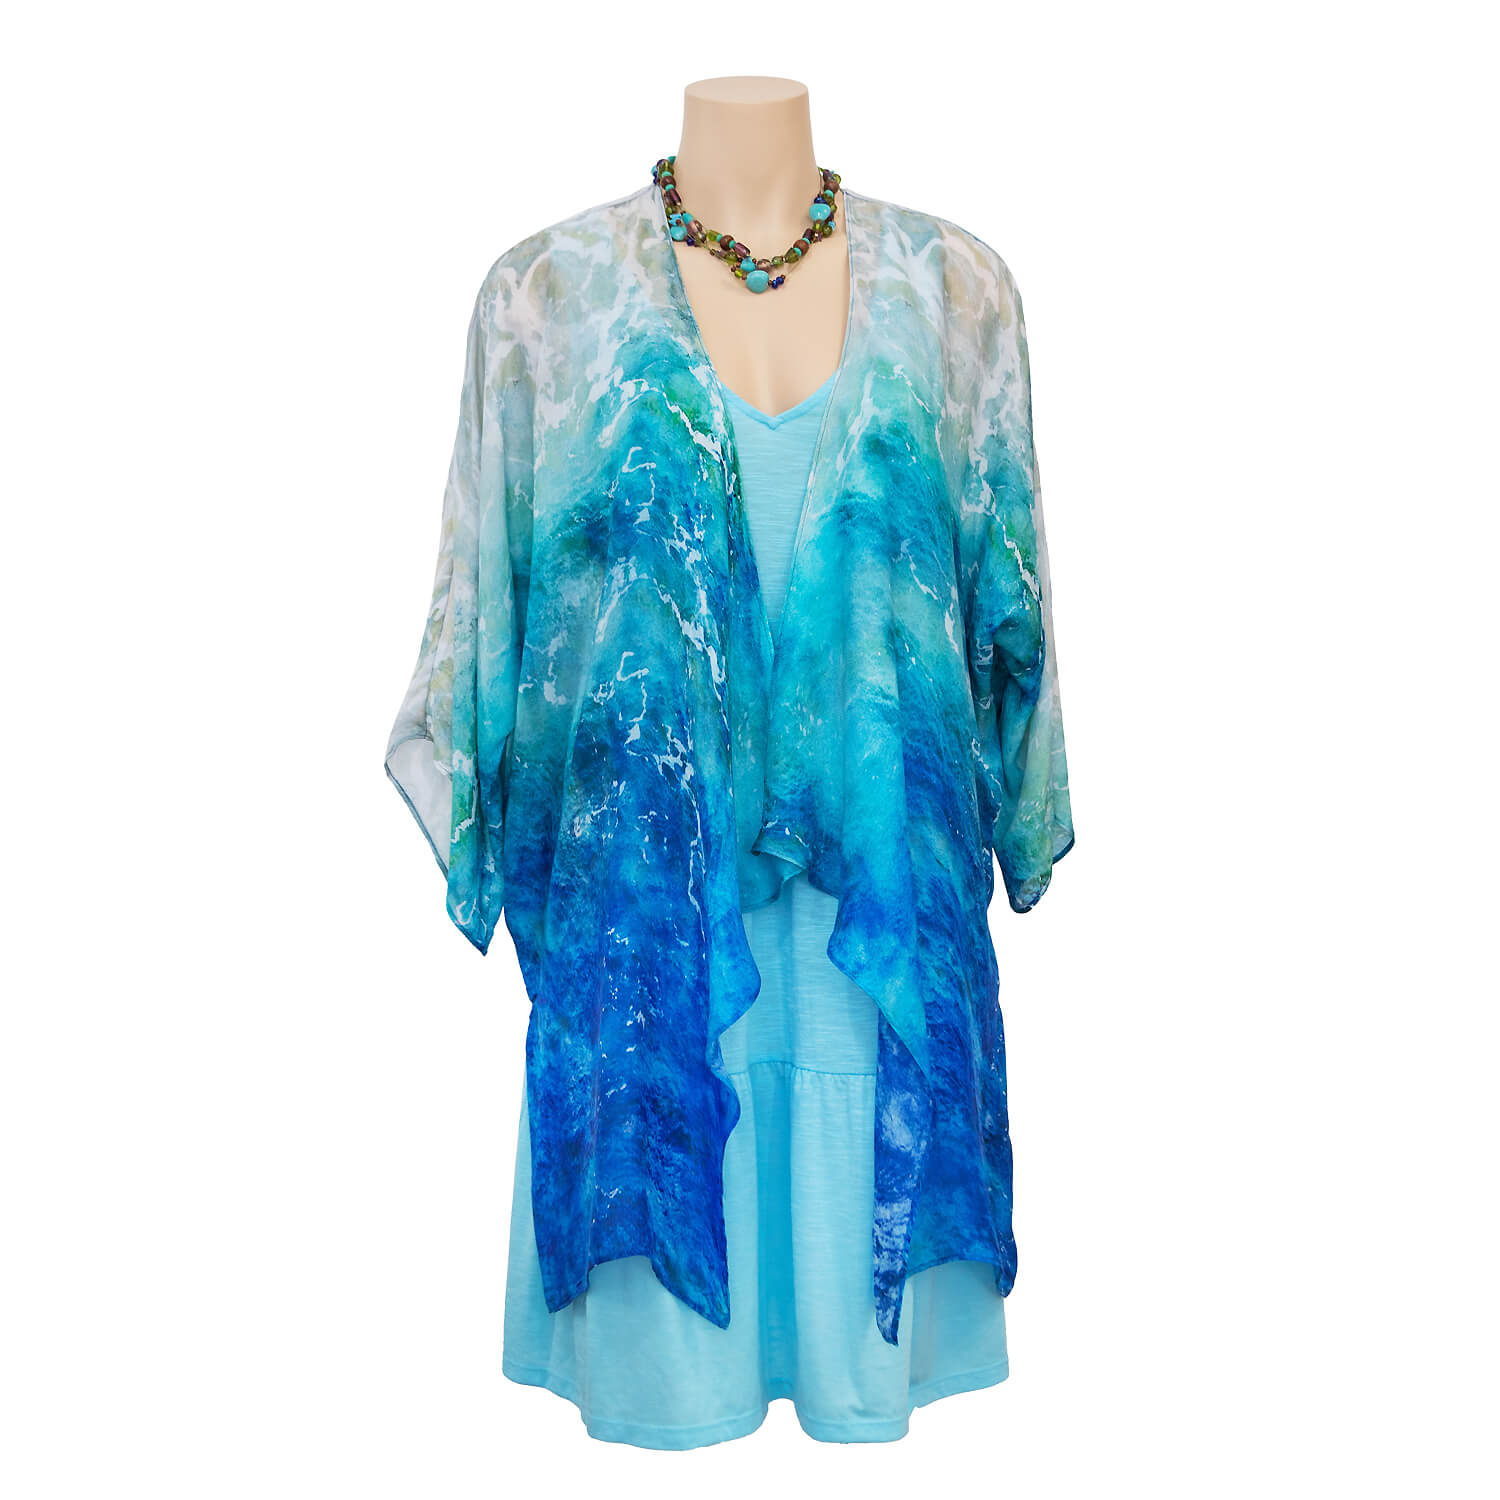 barchetta waterfall jacket over aqua blue dress